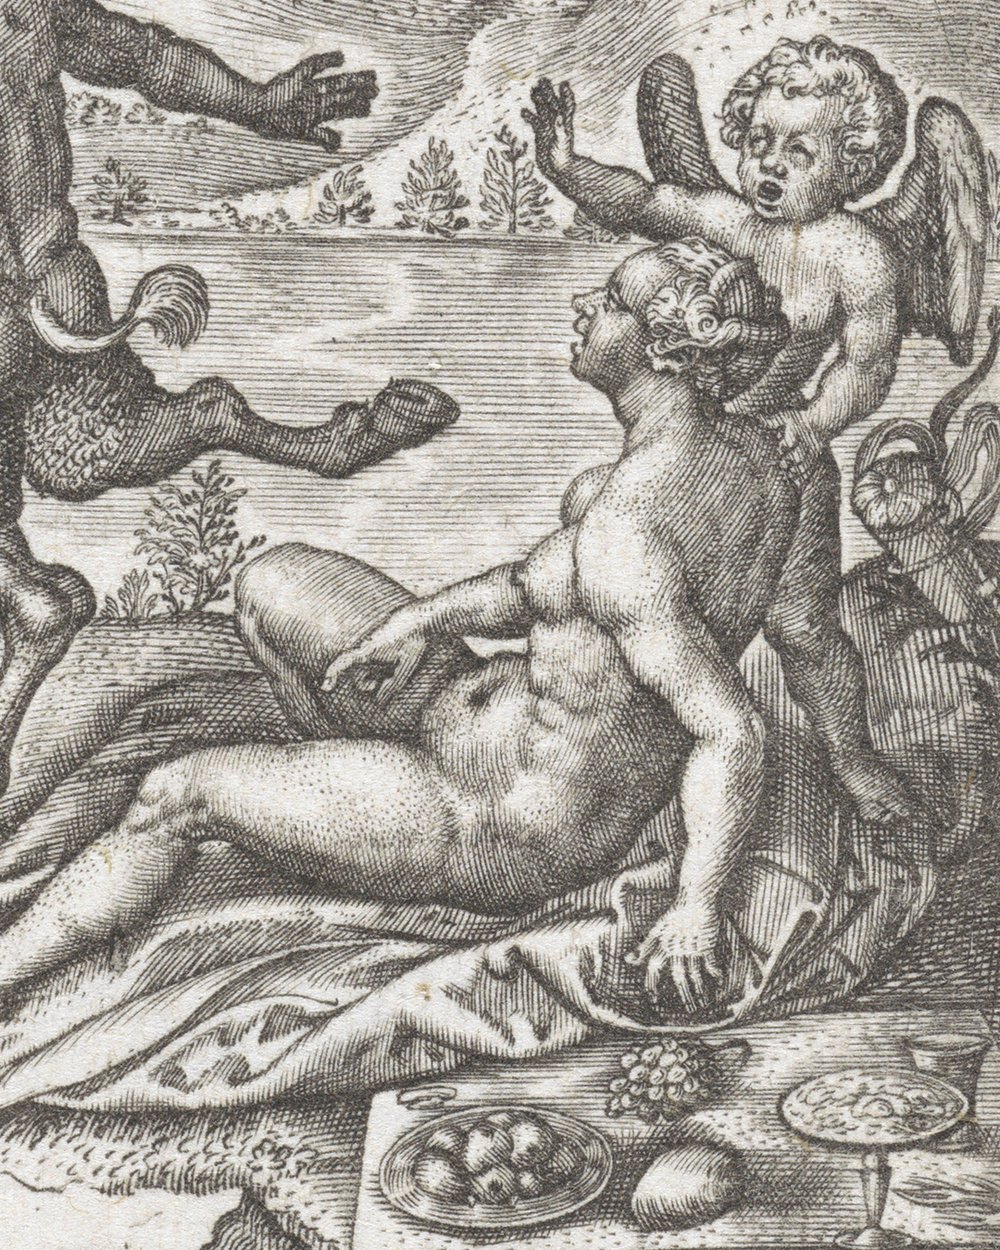 "Triumph of virtue over lust" (1600)